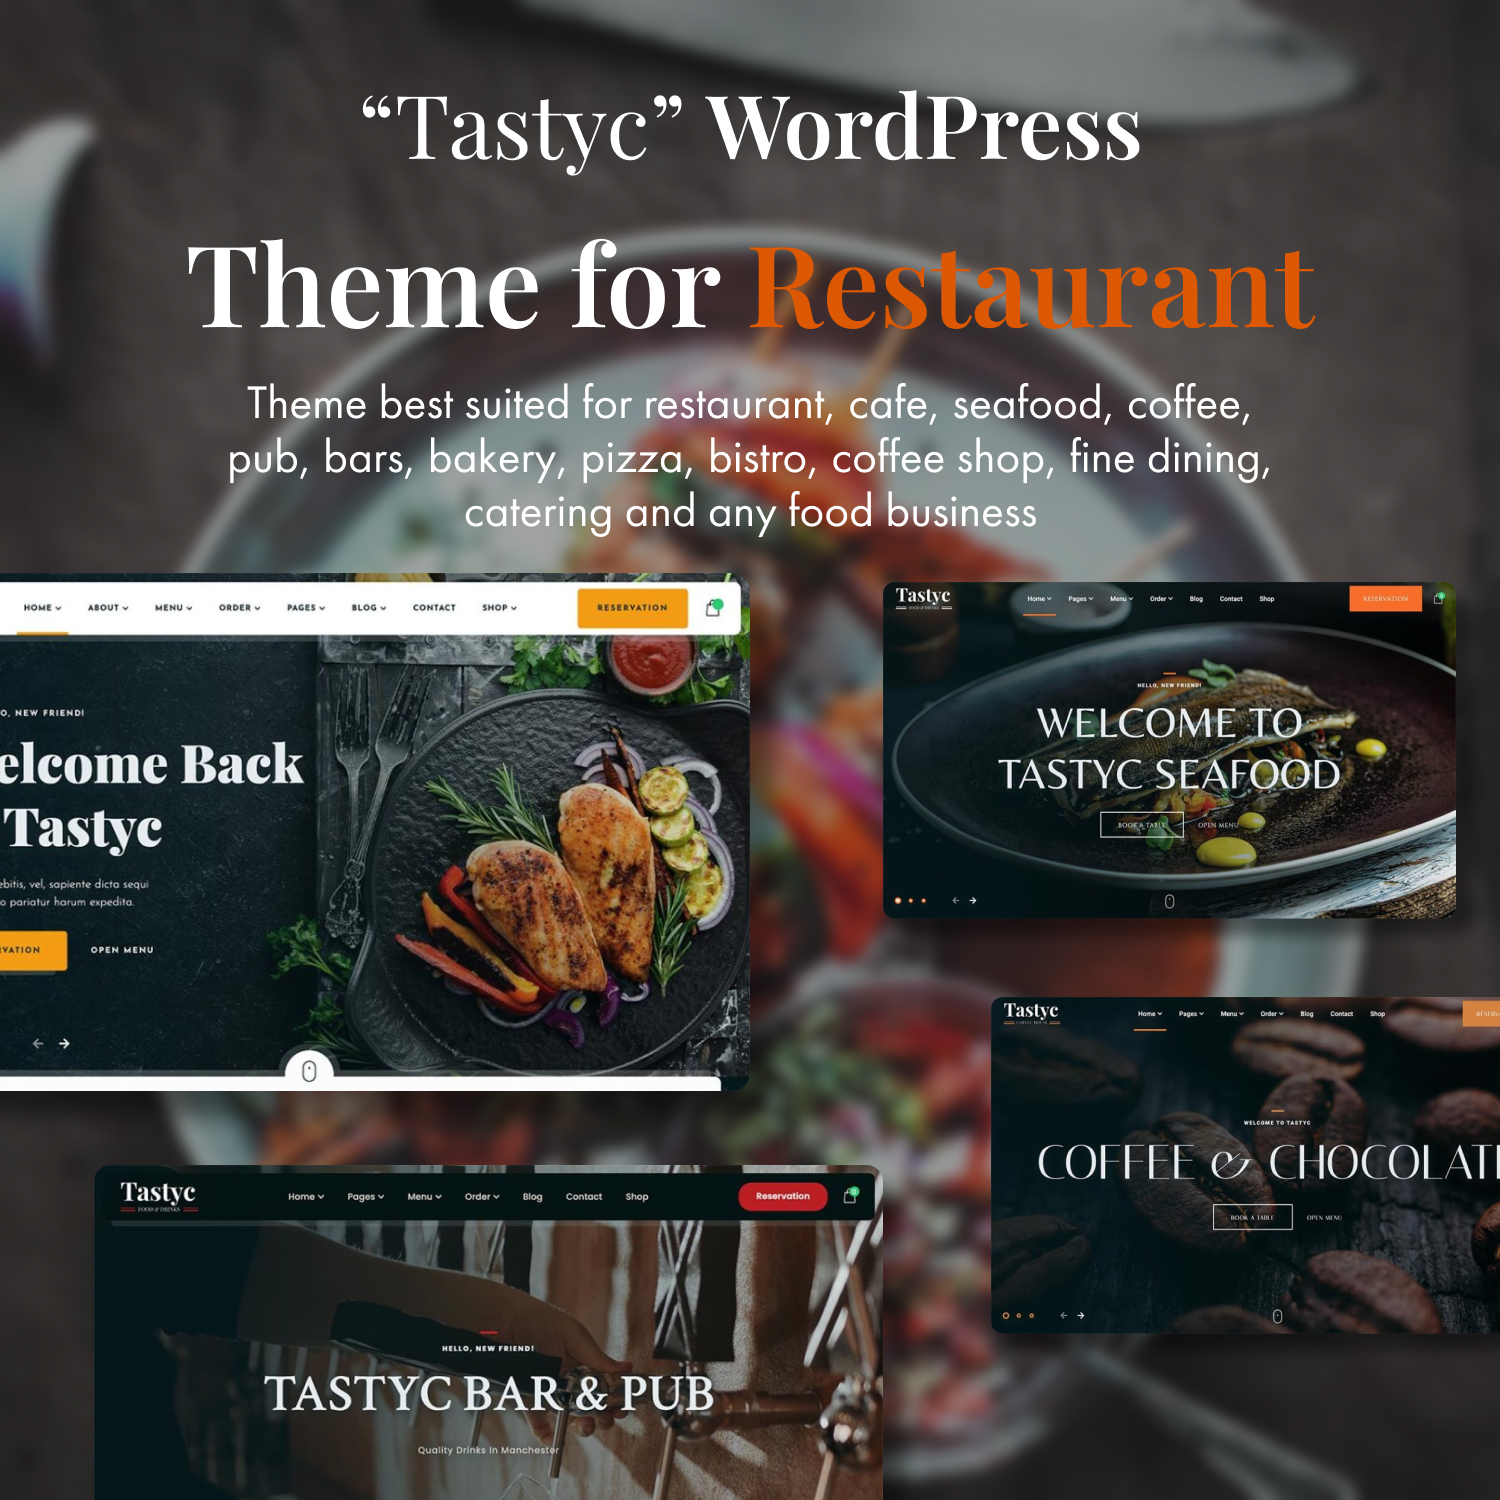 Images with tastyc restaurant wordpress theme.